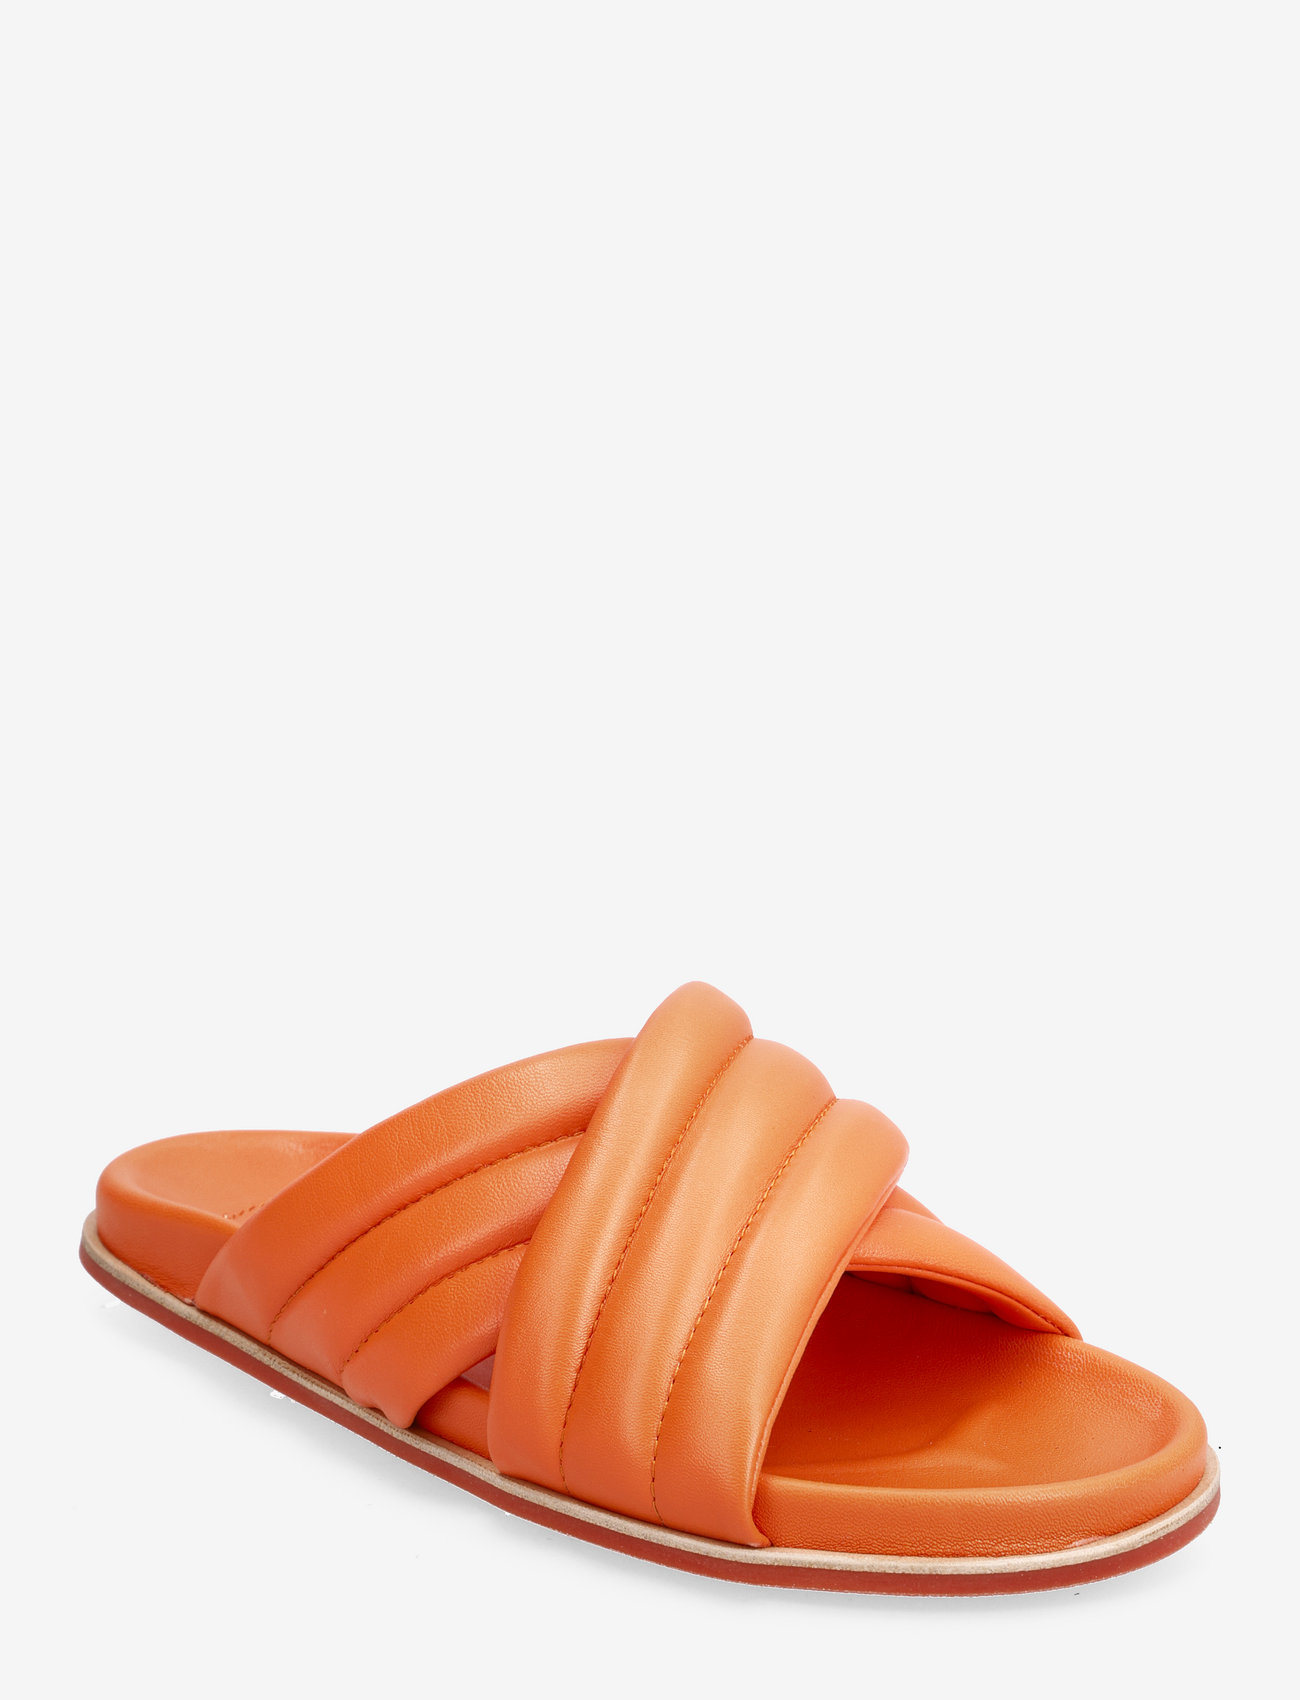 Billi Bi - C5573 - kontsata sandaalid - orange nappa - 0